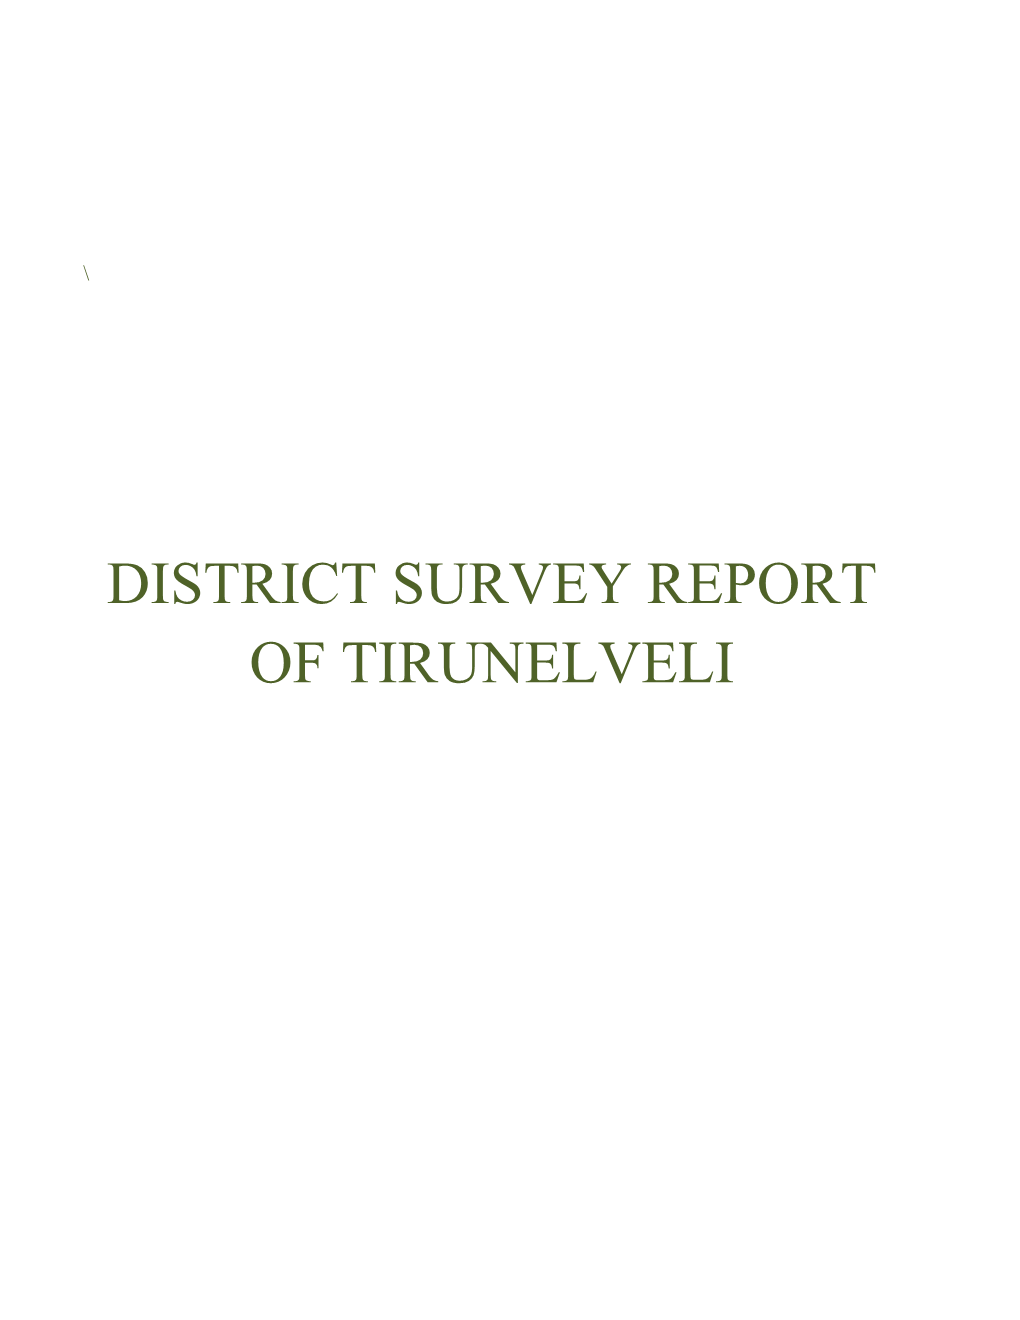 District Survey Report of Tirunelveli